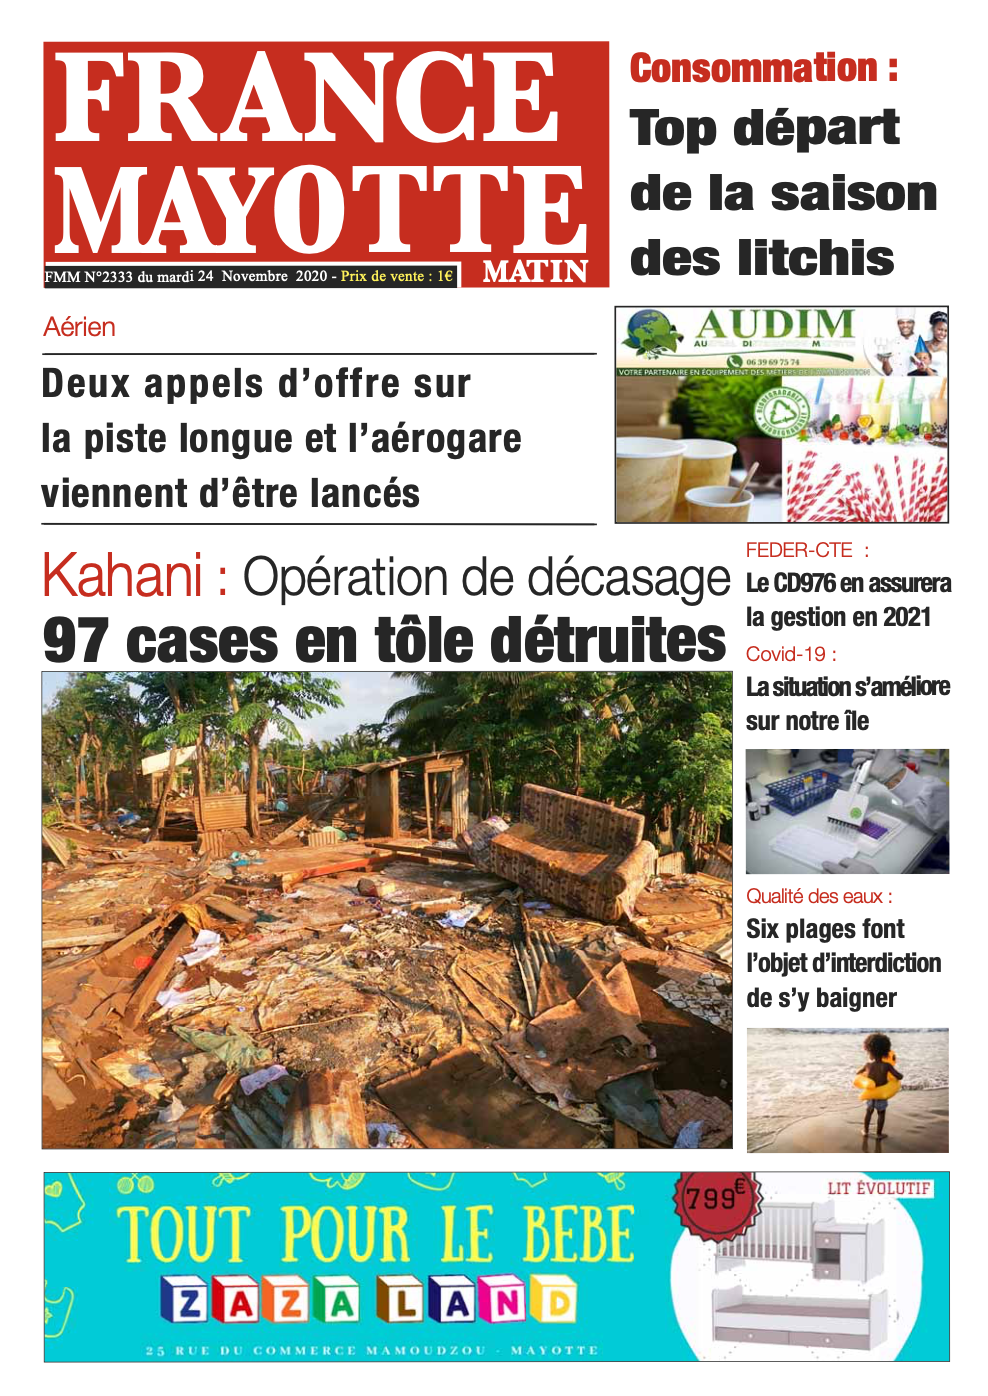 France Mayotte Mardi 24 novembre 2020